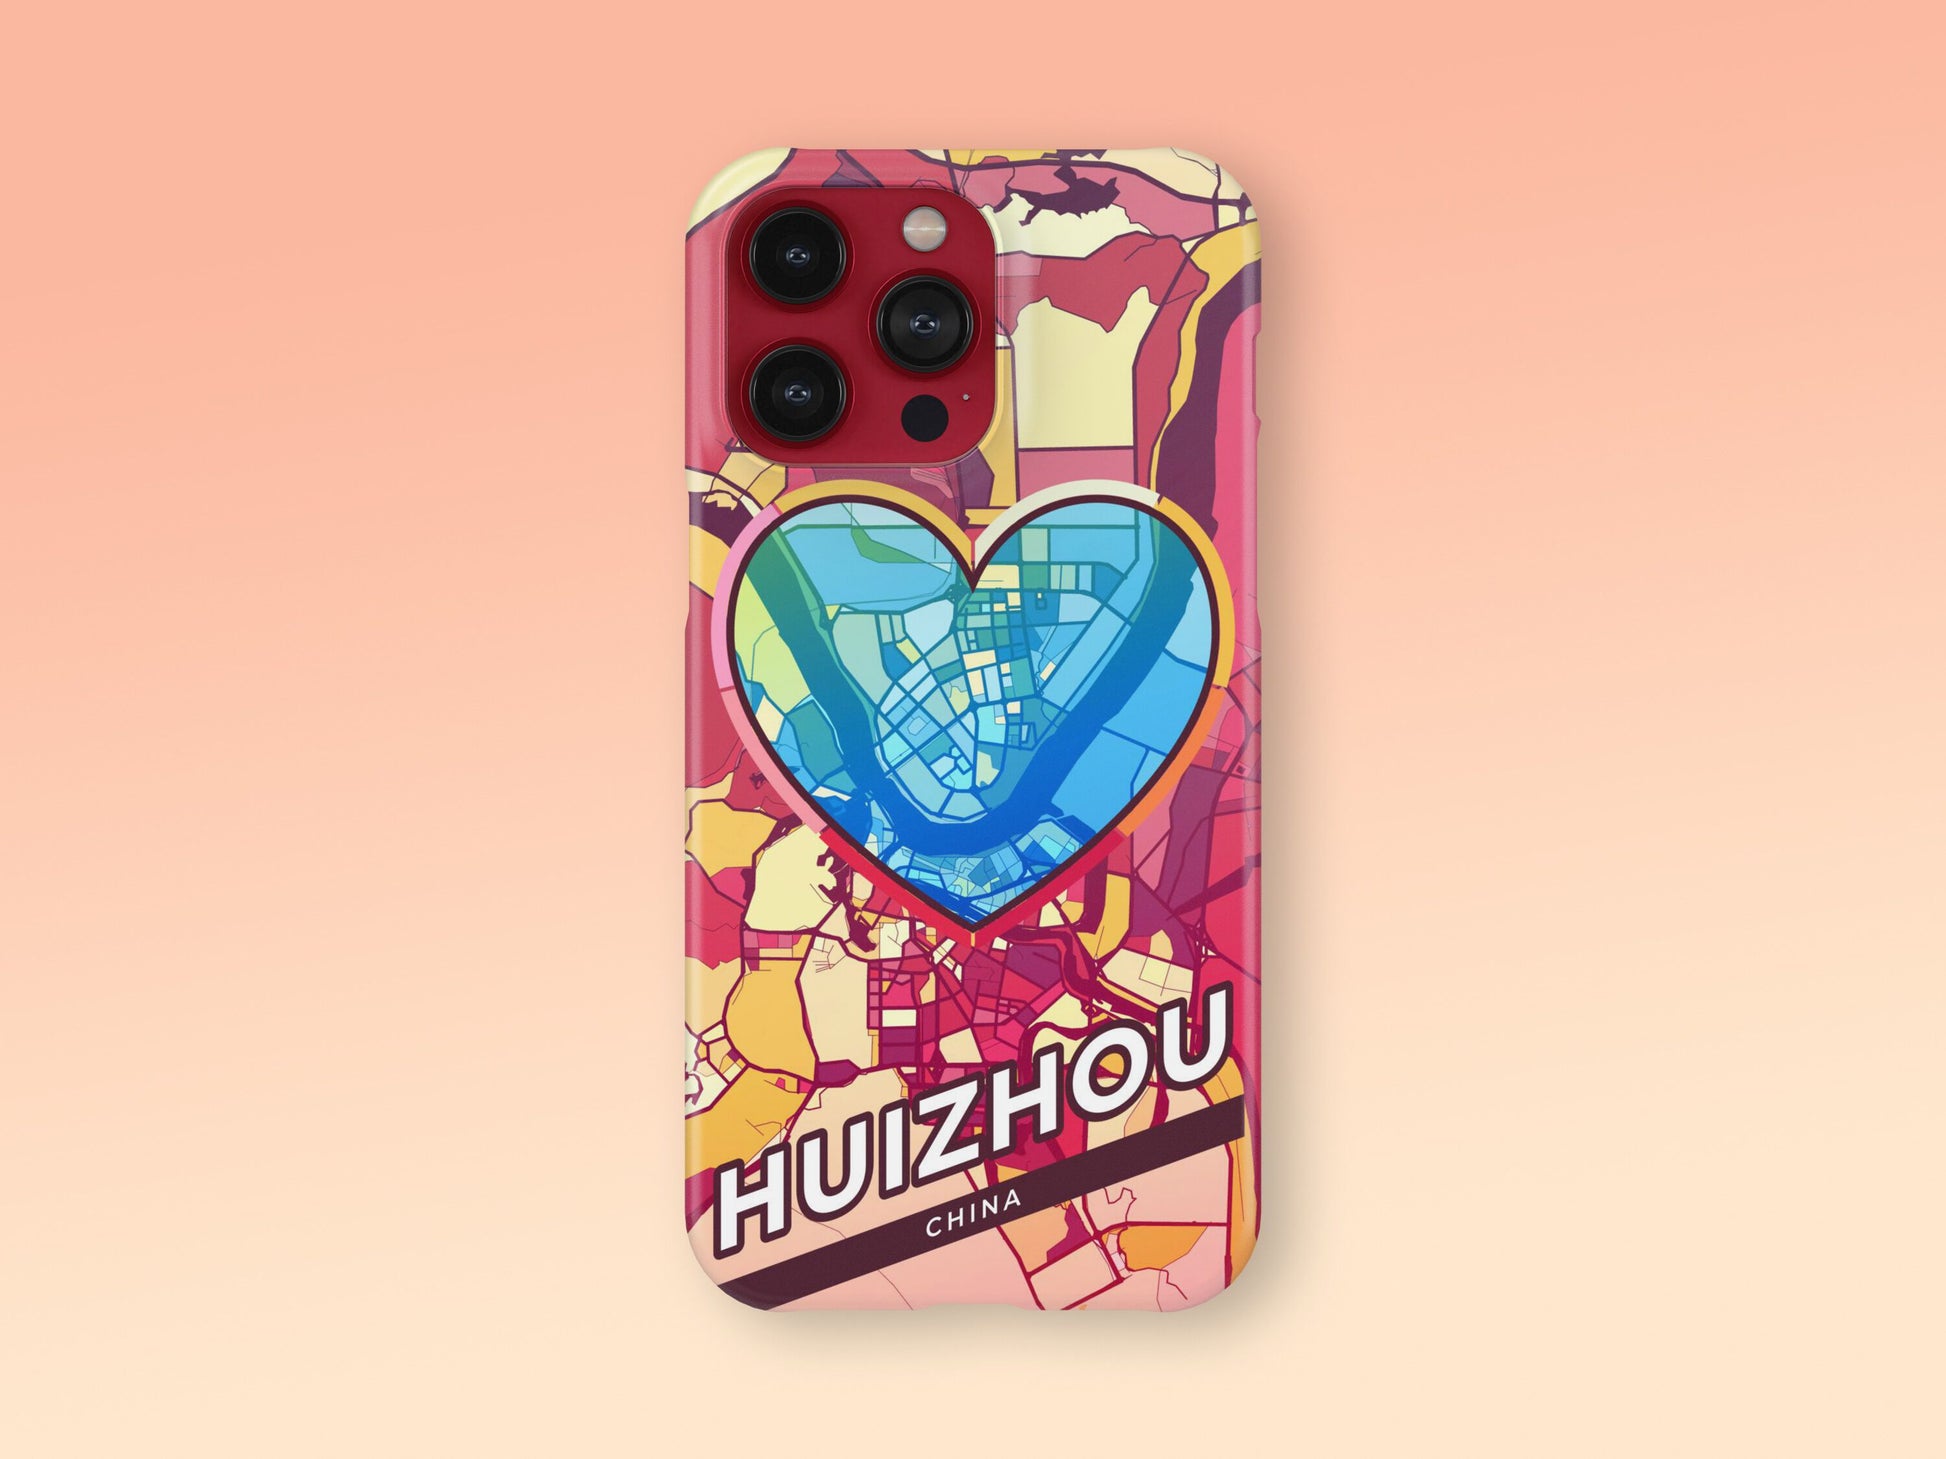 Huizhou China slim phone case with colorful icon. Birthday, wedding or housewarming gift. Couple match cases. 2